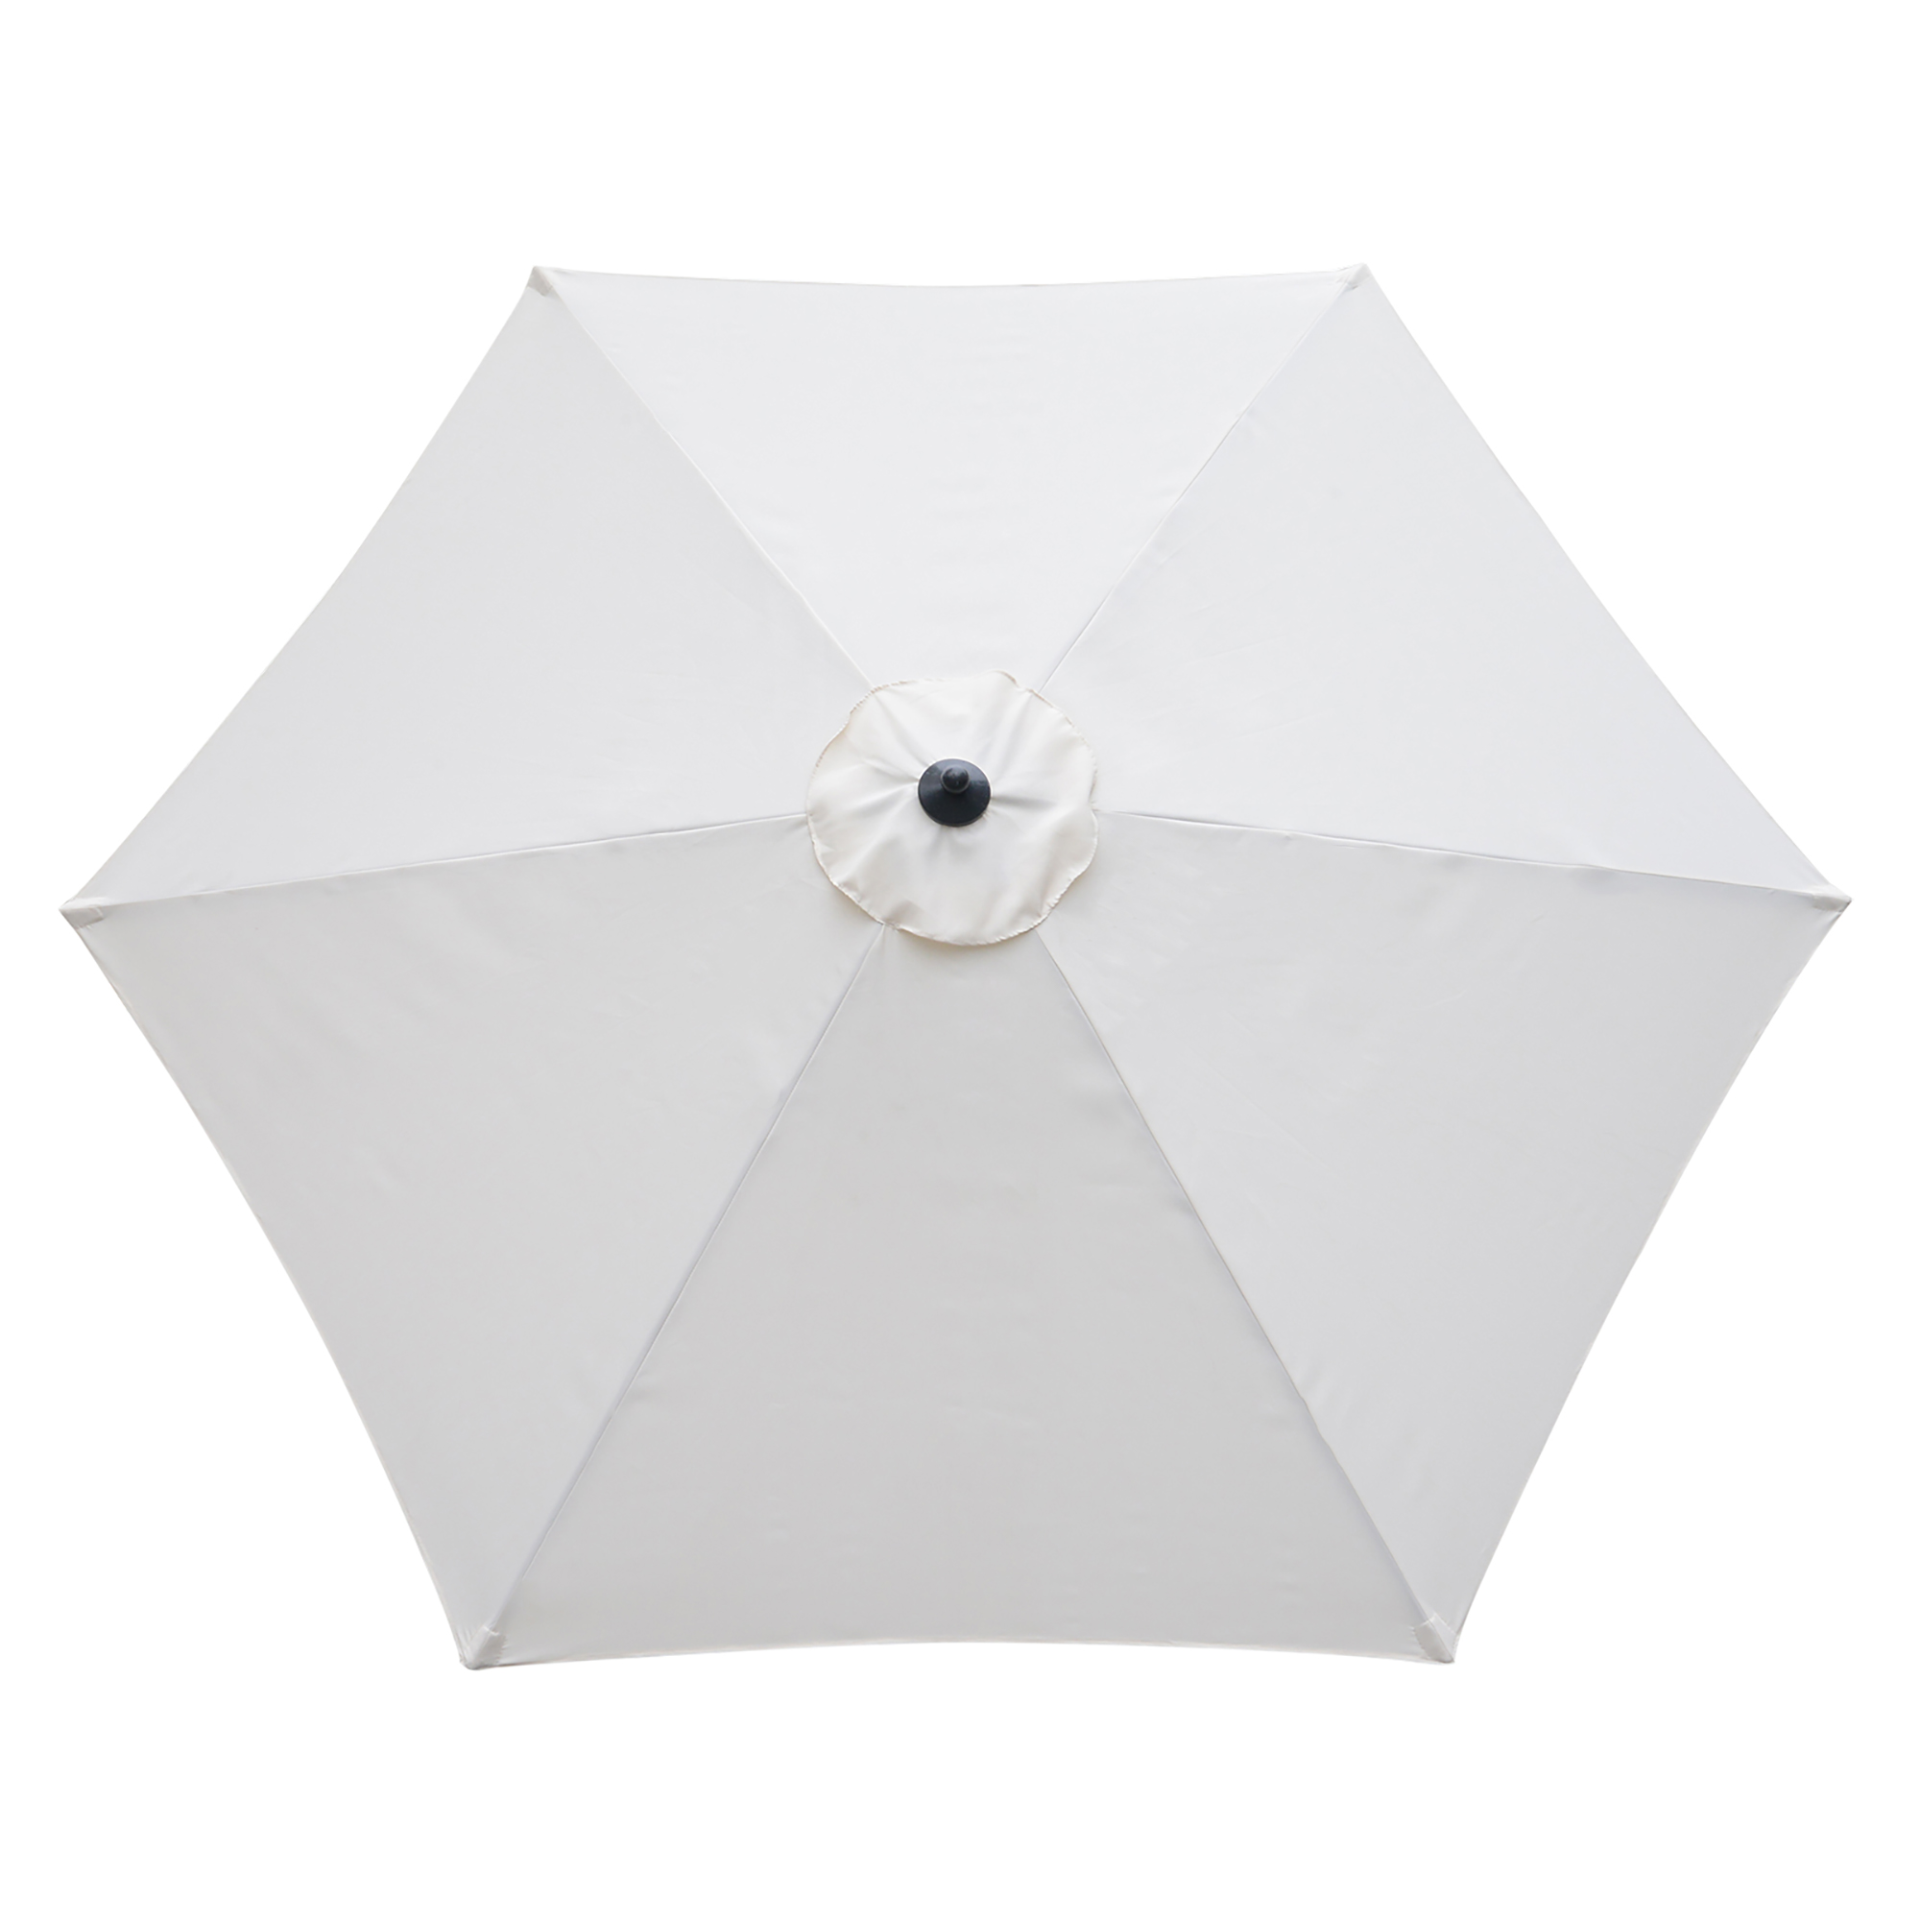 Outsunny 2.8m Patio Parasols Umbrellas Outdoor 6 Ribs Sunshade Canopy Manual Push Garden Backyard Furniture, Off-White